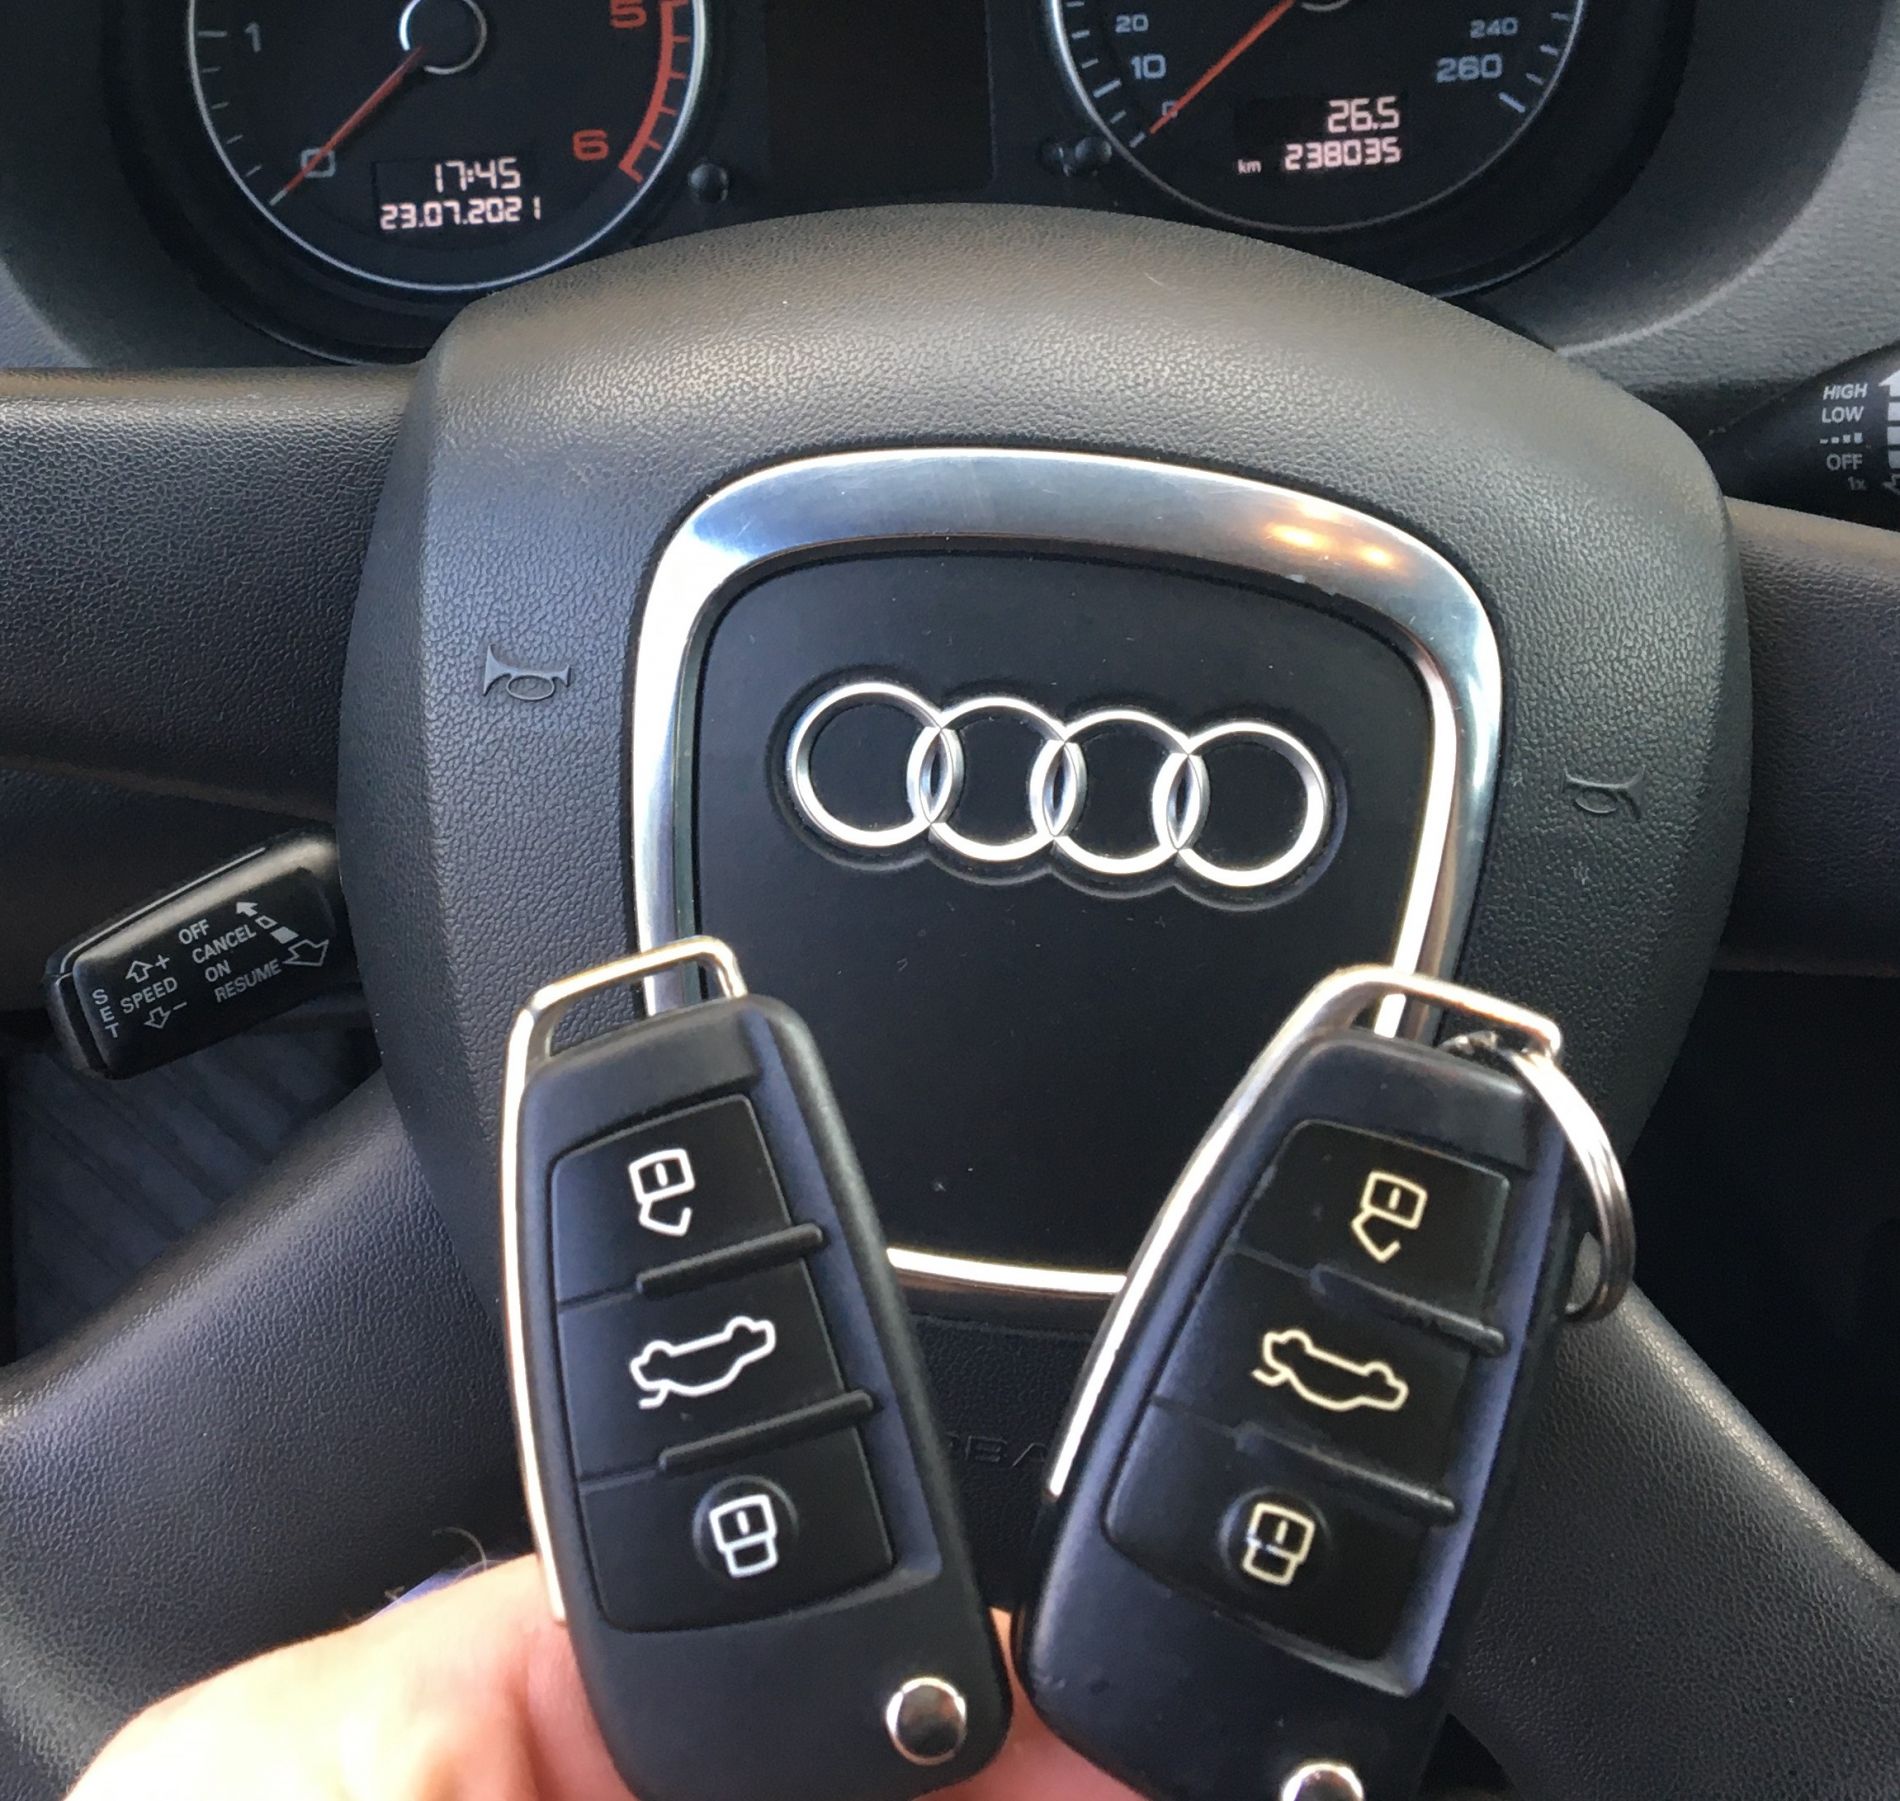 Dorobienie kluczyka do Audi A3 z 2010 roku.